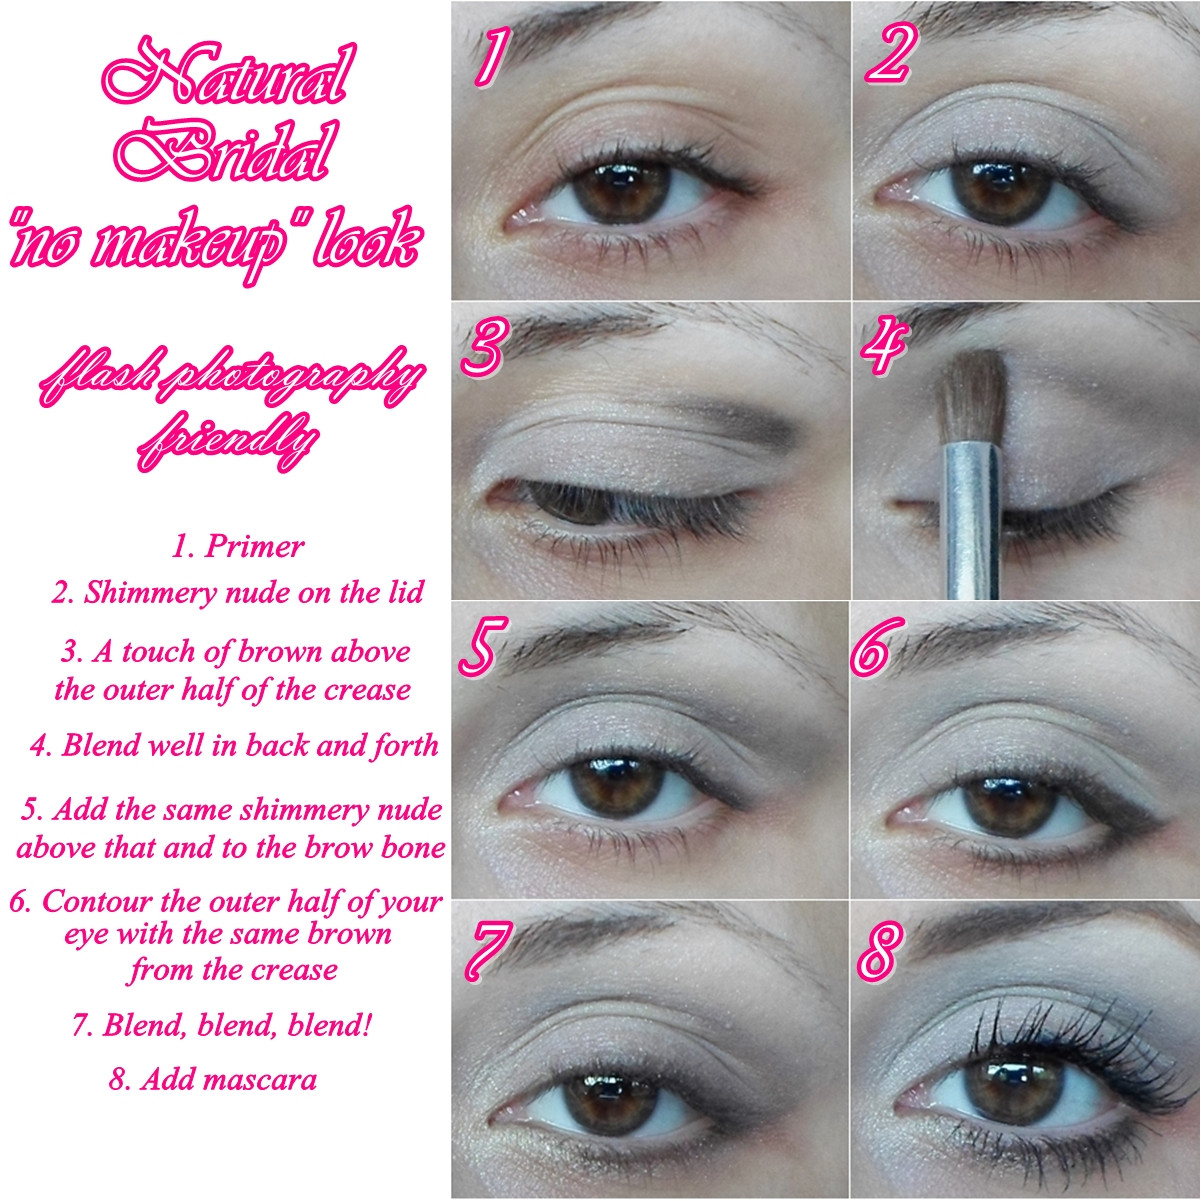 Wedding Makeup Tutorials
 Bridal natural “no makeup” step by step tutorial great